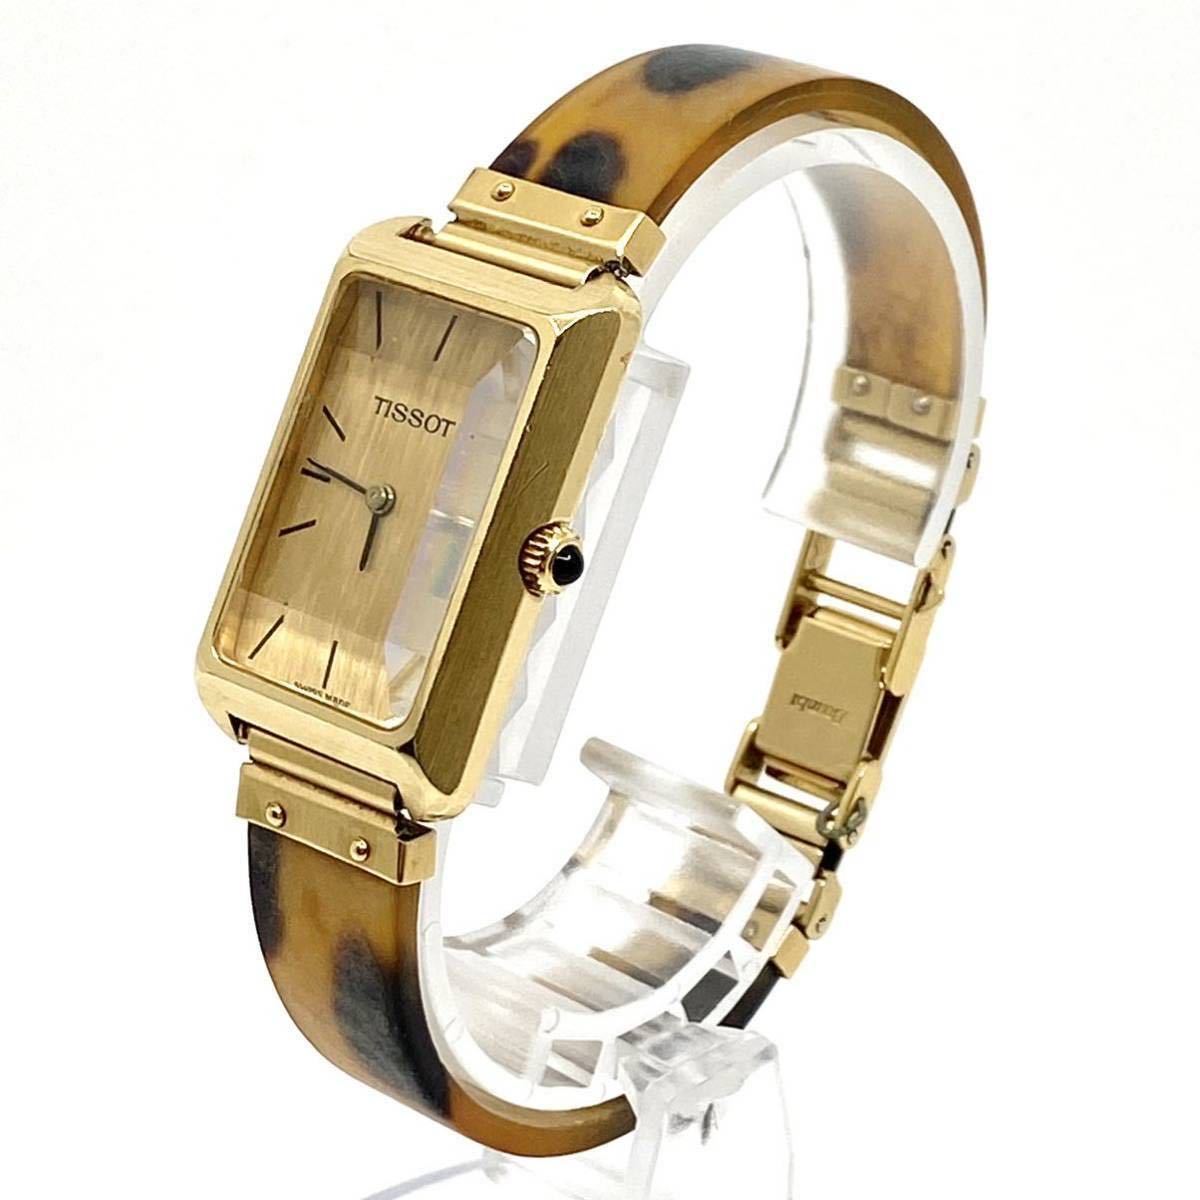 TISSOT 腕時計 手巻き式 ブレスウォッチ バングル カットガラス バーインデックス 2針 ゴールド 金 ティソ 鼈甲風 べっ甲風 Y352_画像2